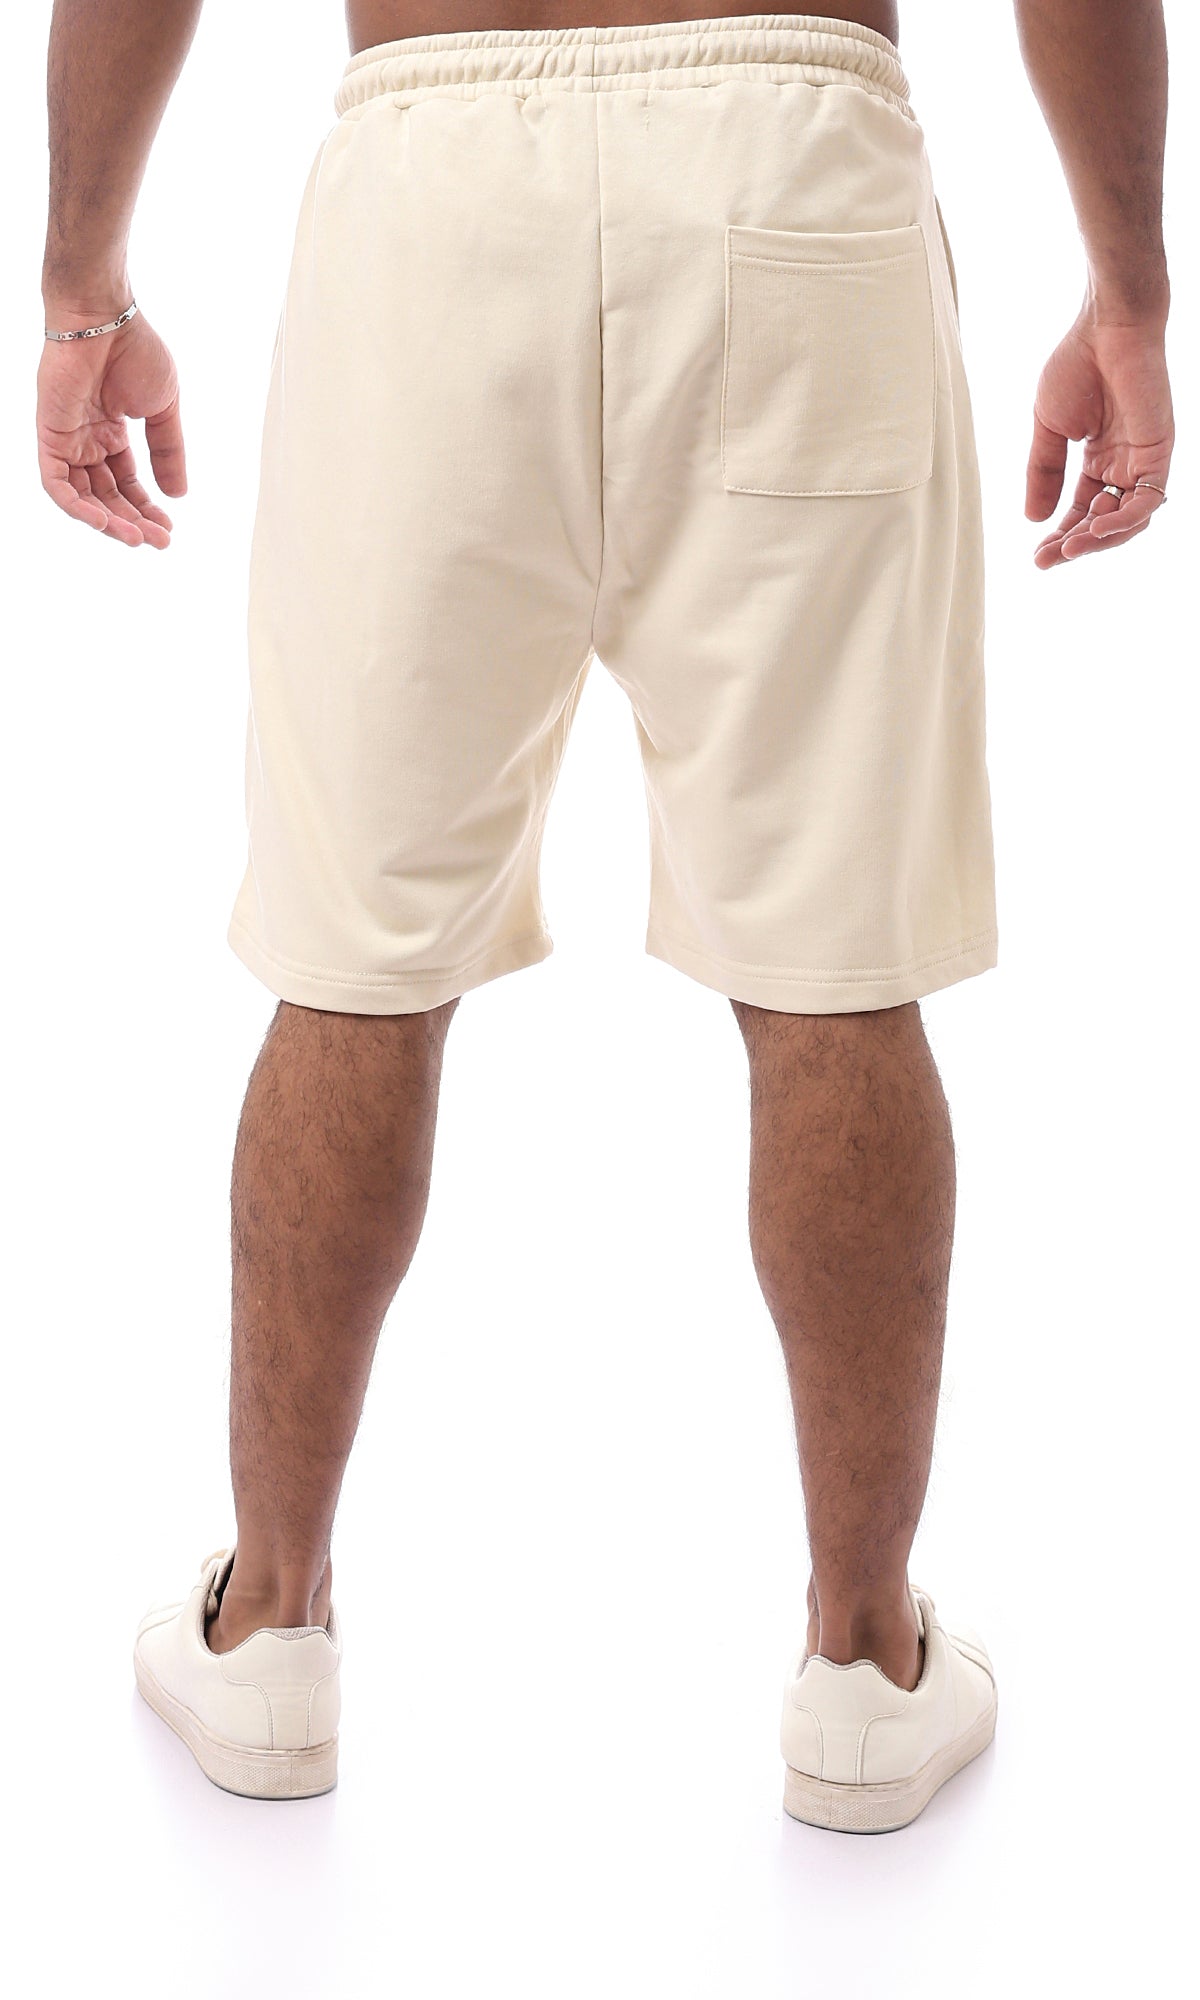 O172958 Cotton Beige Slip On Comfy Shorts